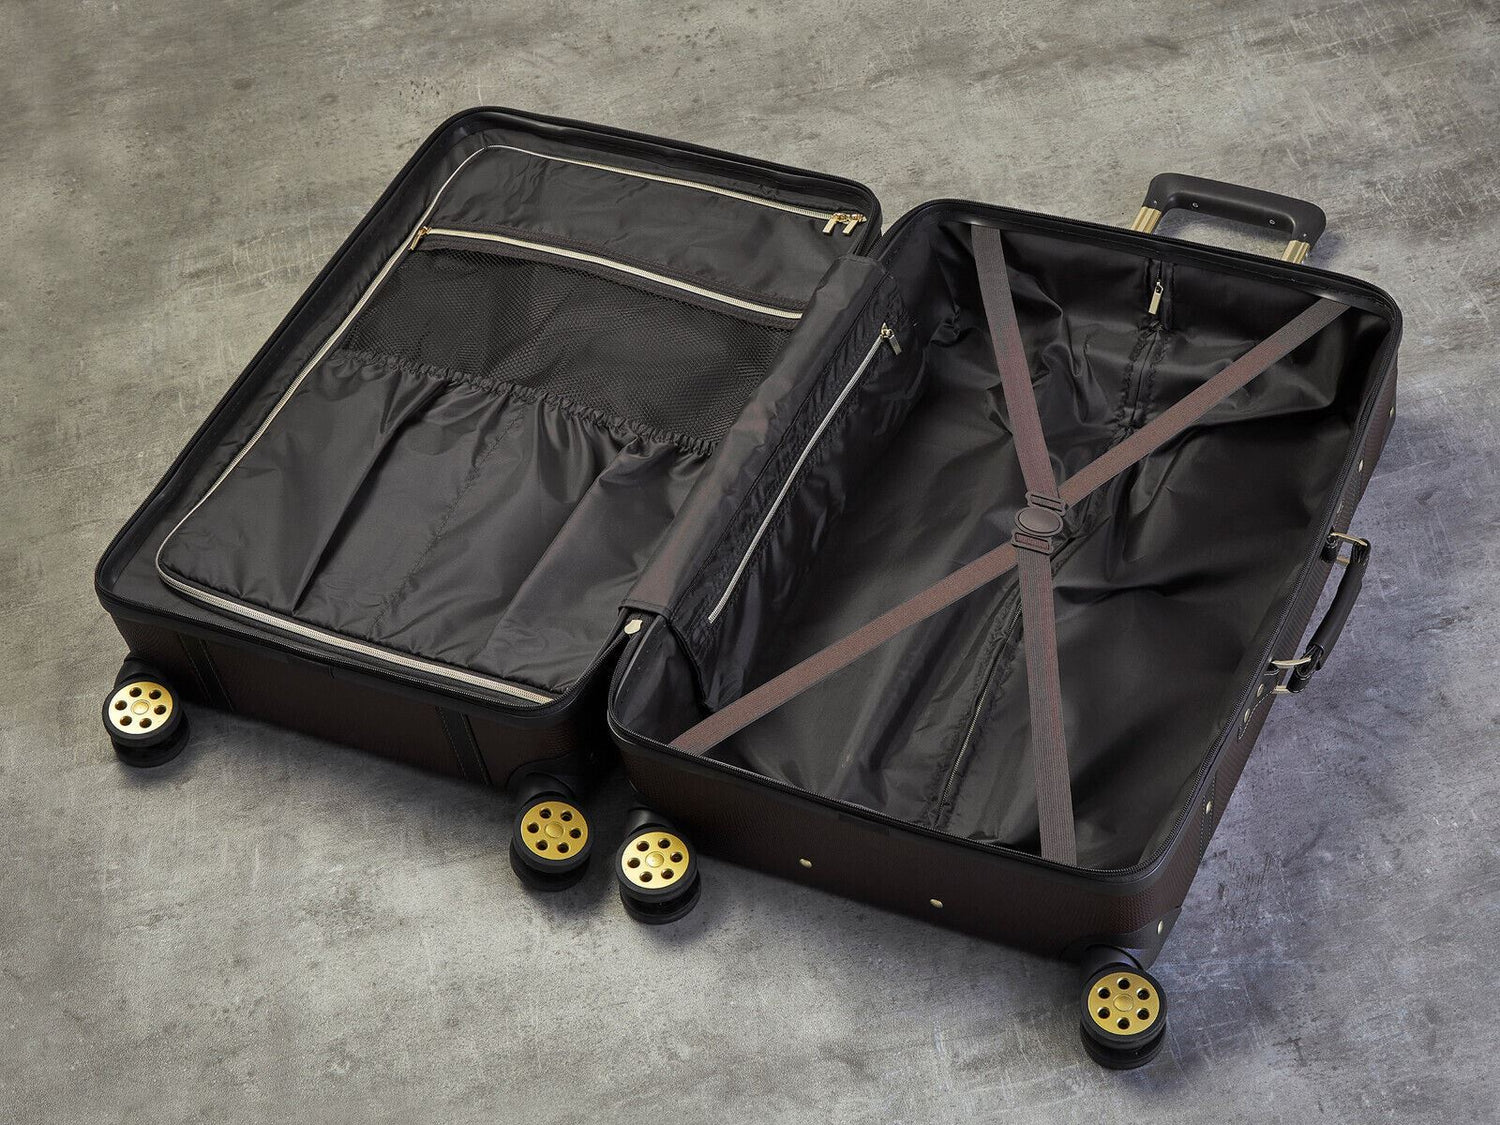 Alexandria Cabin Hard Shell Suitcase in Burgundy